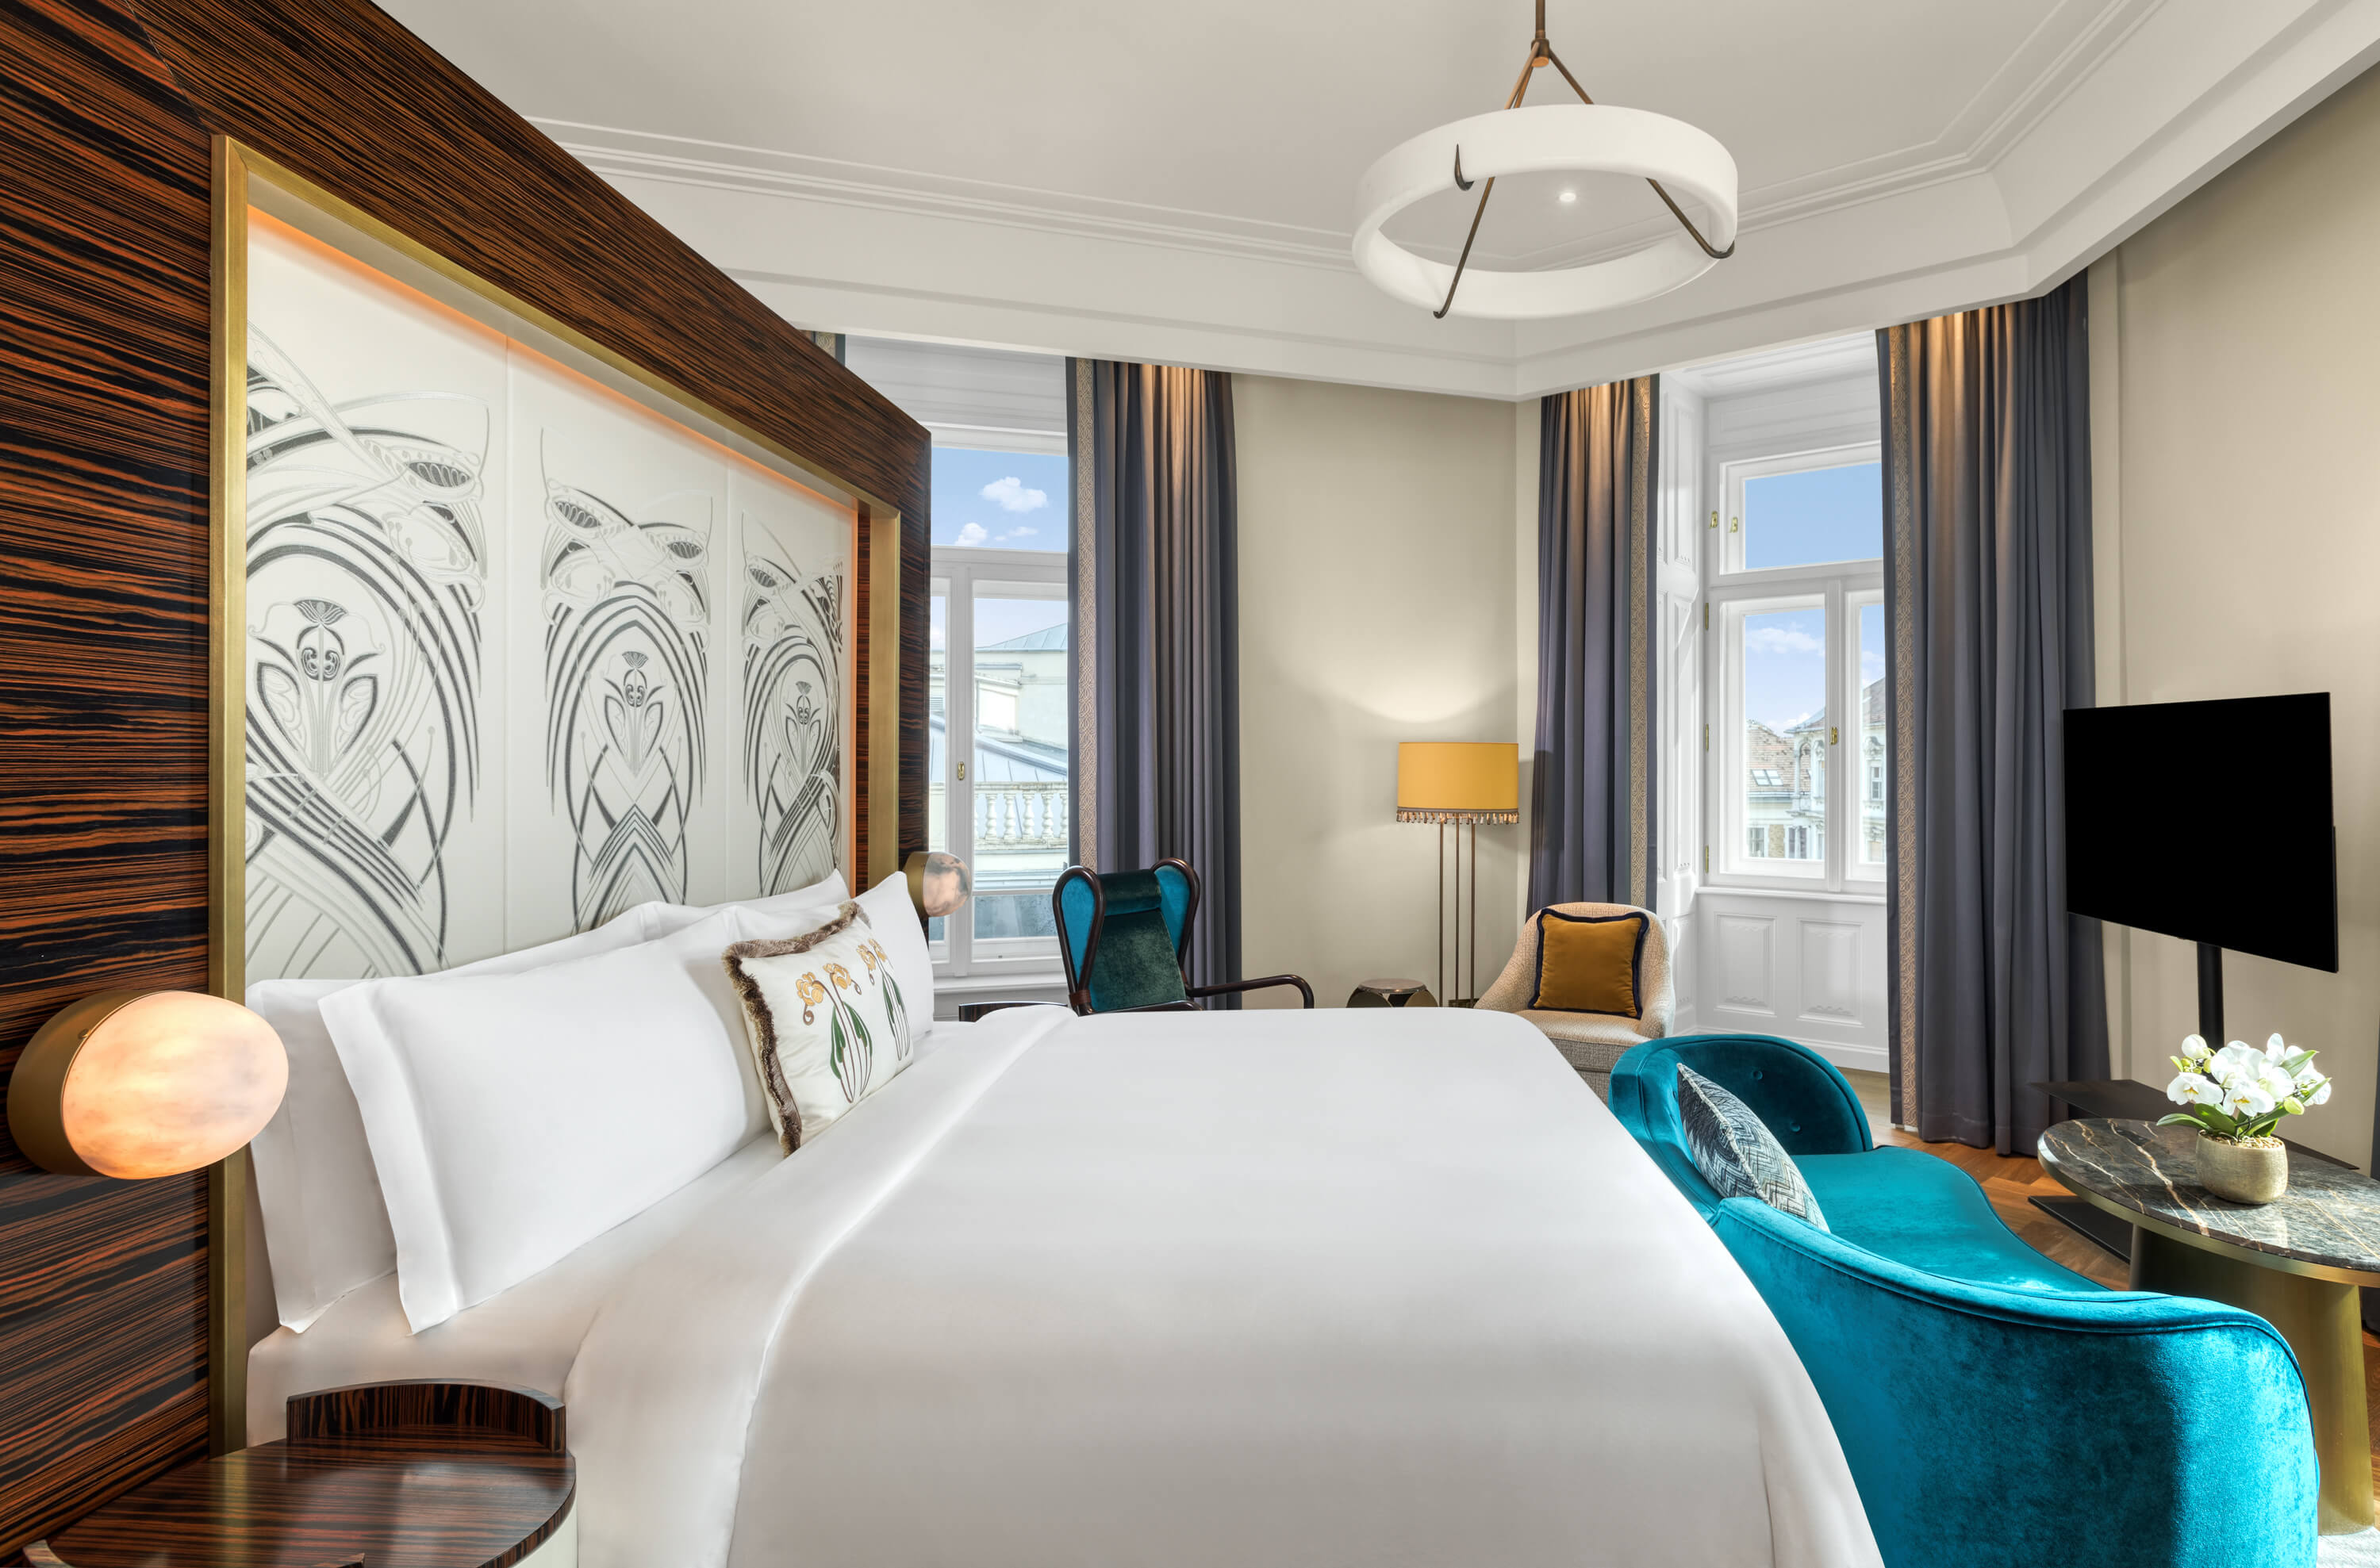 Matild Palace Budapest Voted  'Sleep Friendly Hotel of the Year'